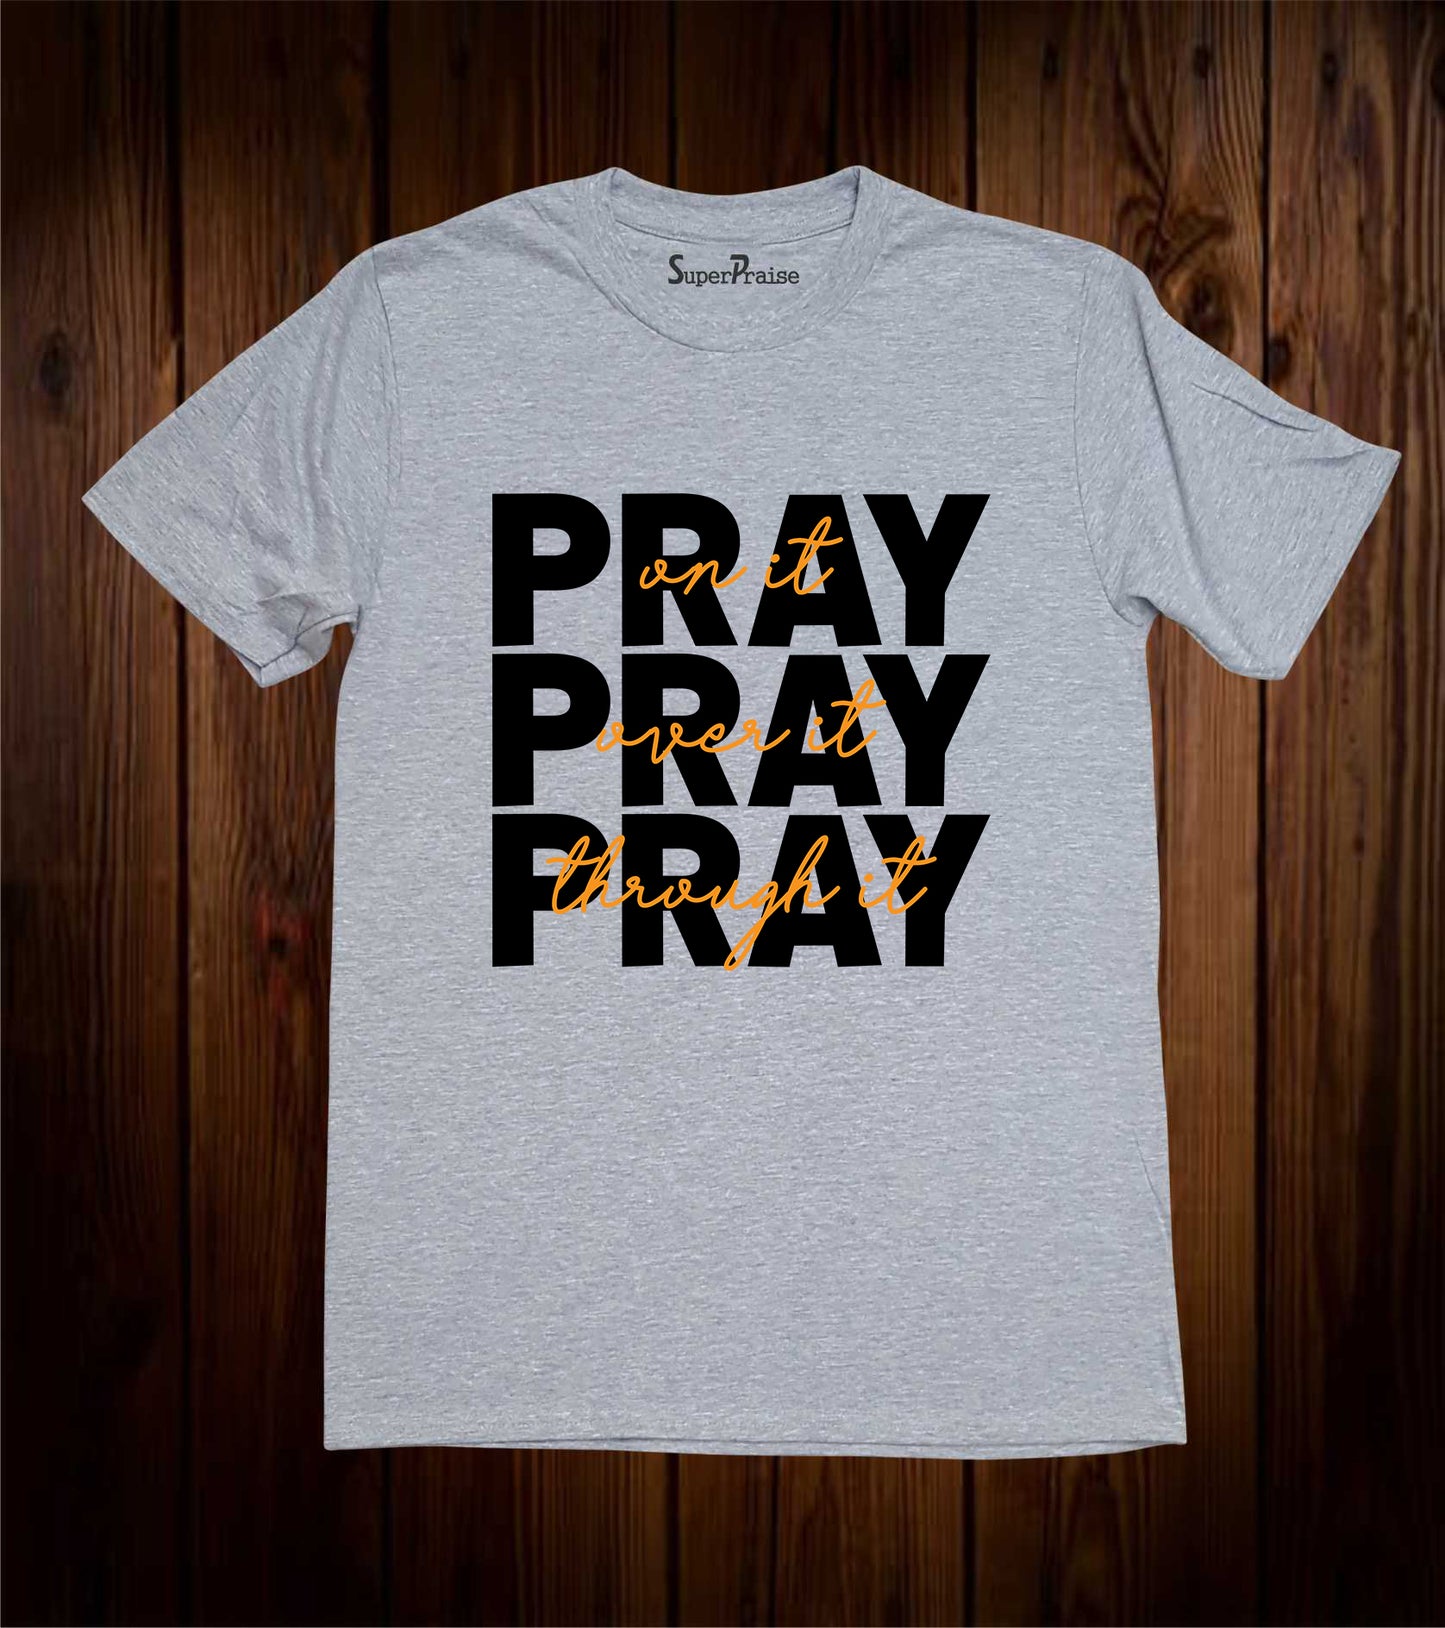 Pray On It Pray Over It Christian T Shirt